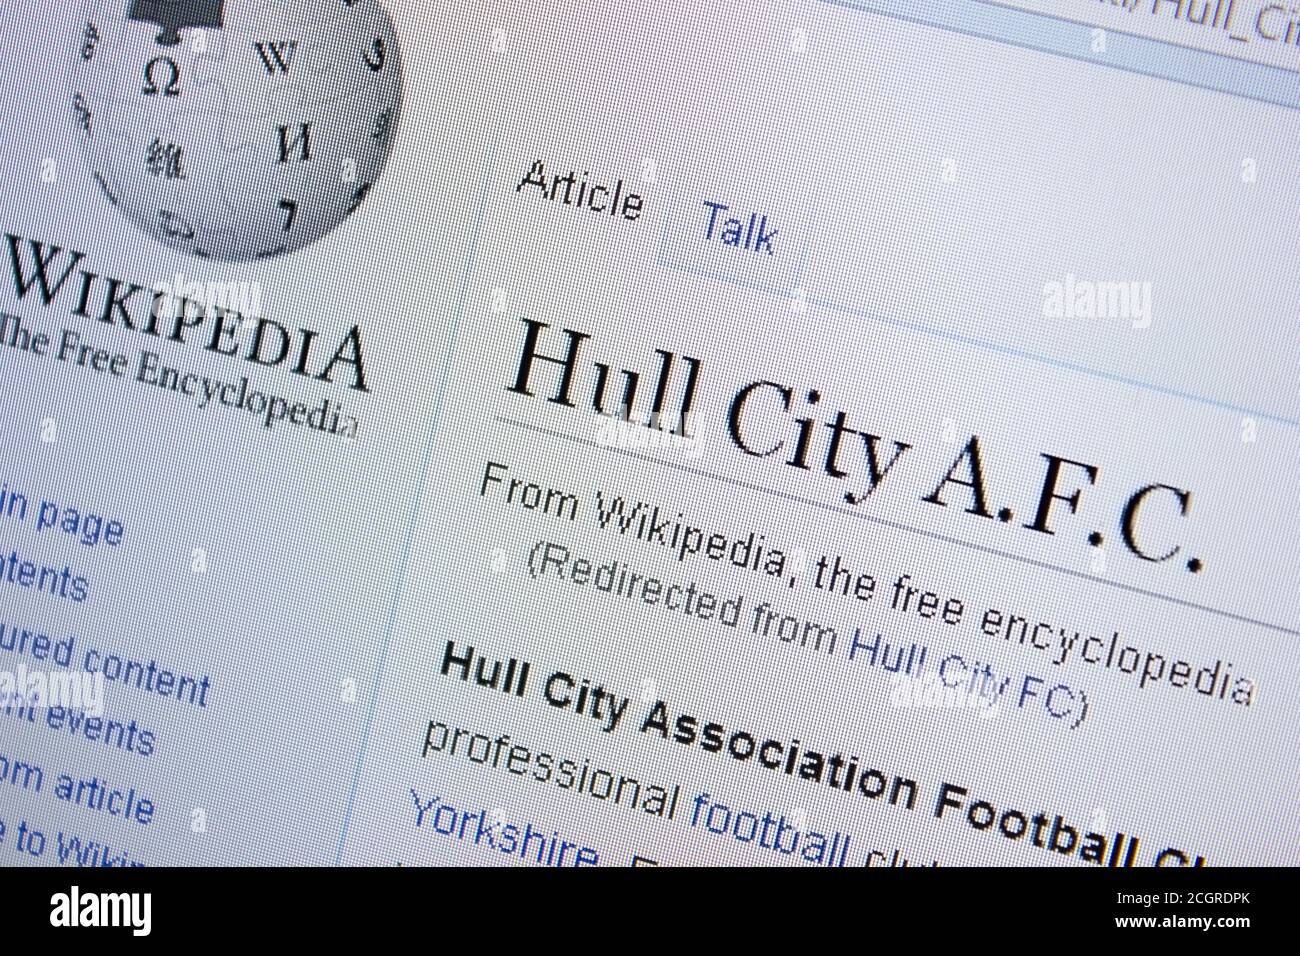 Hull City A.F.C. - Wikipedia